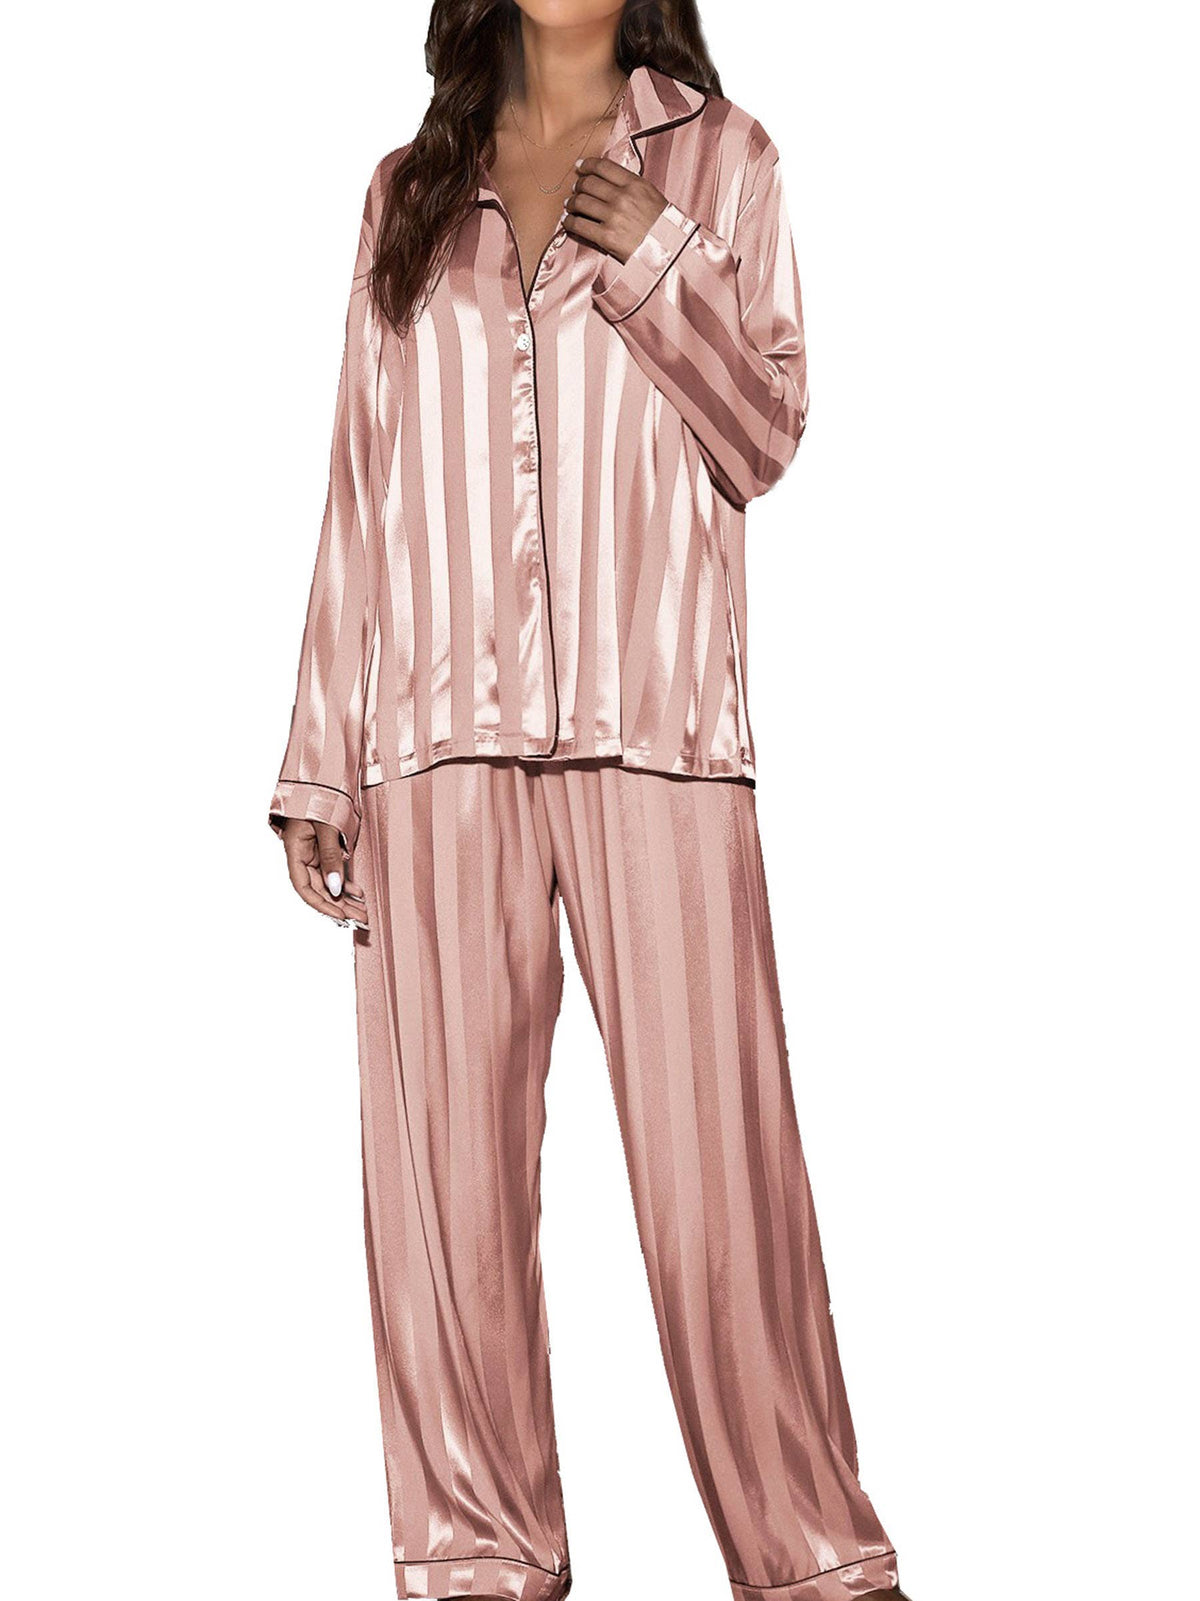 2 Piece Button Front Sleepwear Pants Set Loungewear: L / Pink